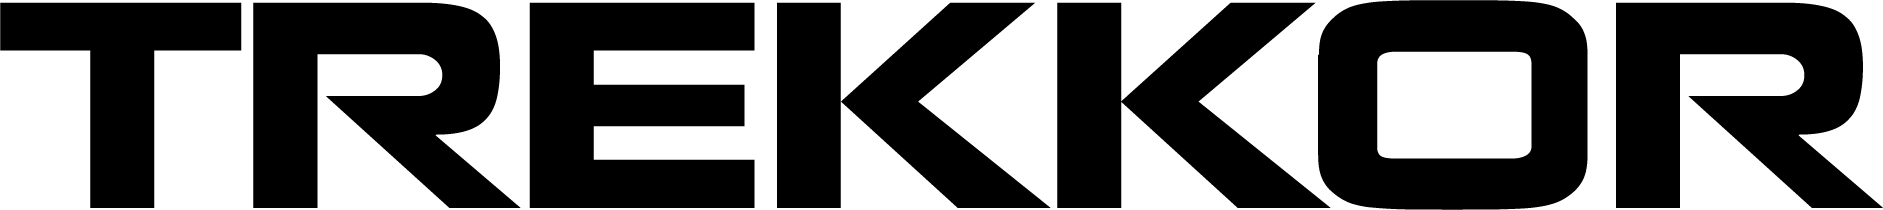 Trekkor Company Logotype Black Png